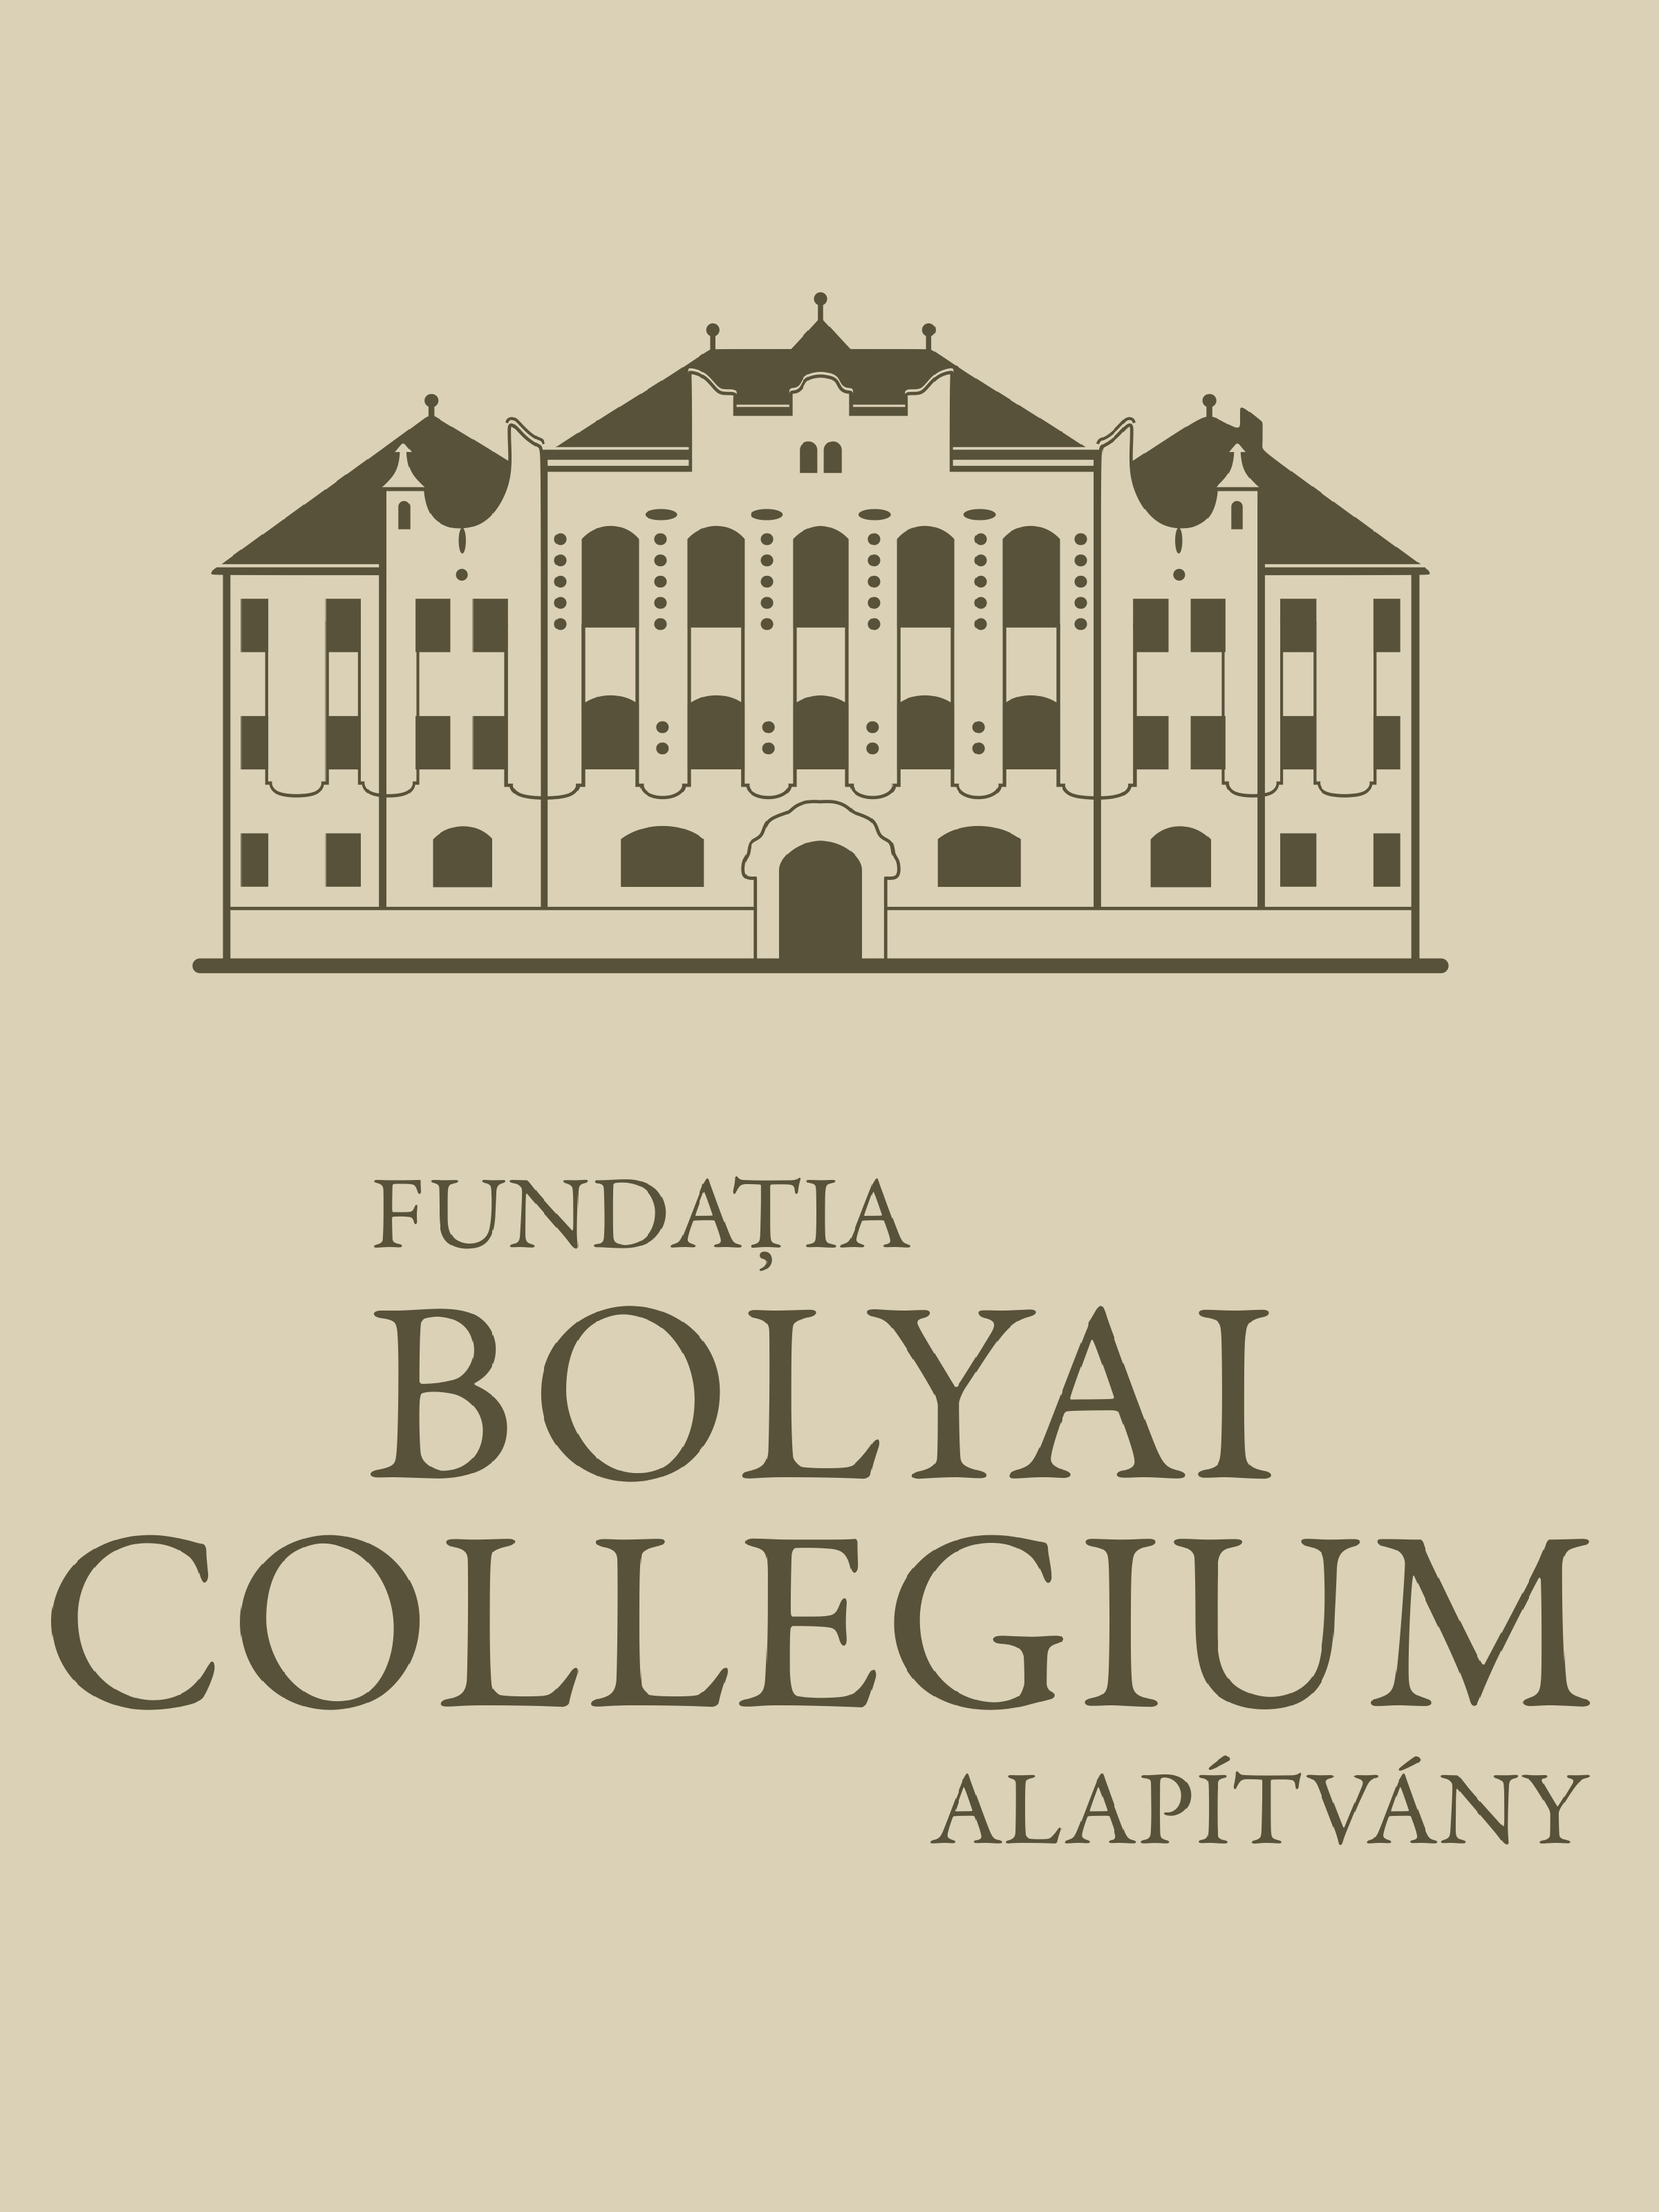 Fundația Bolyai Collegium logo